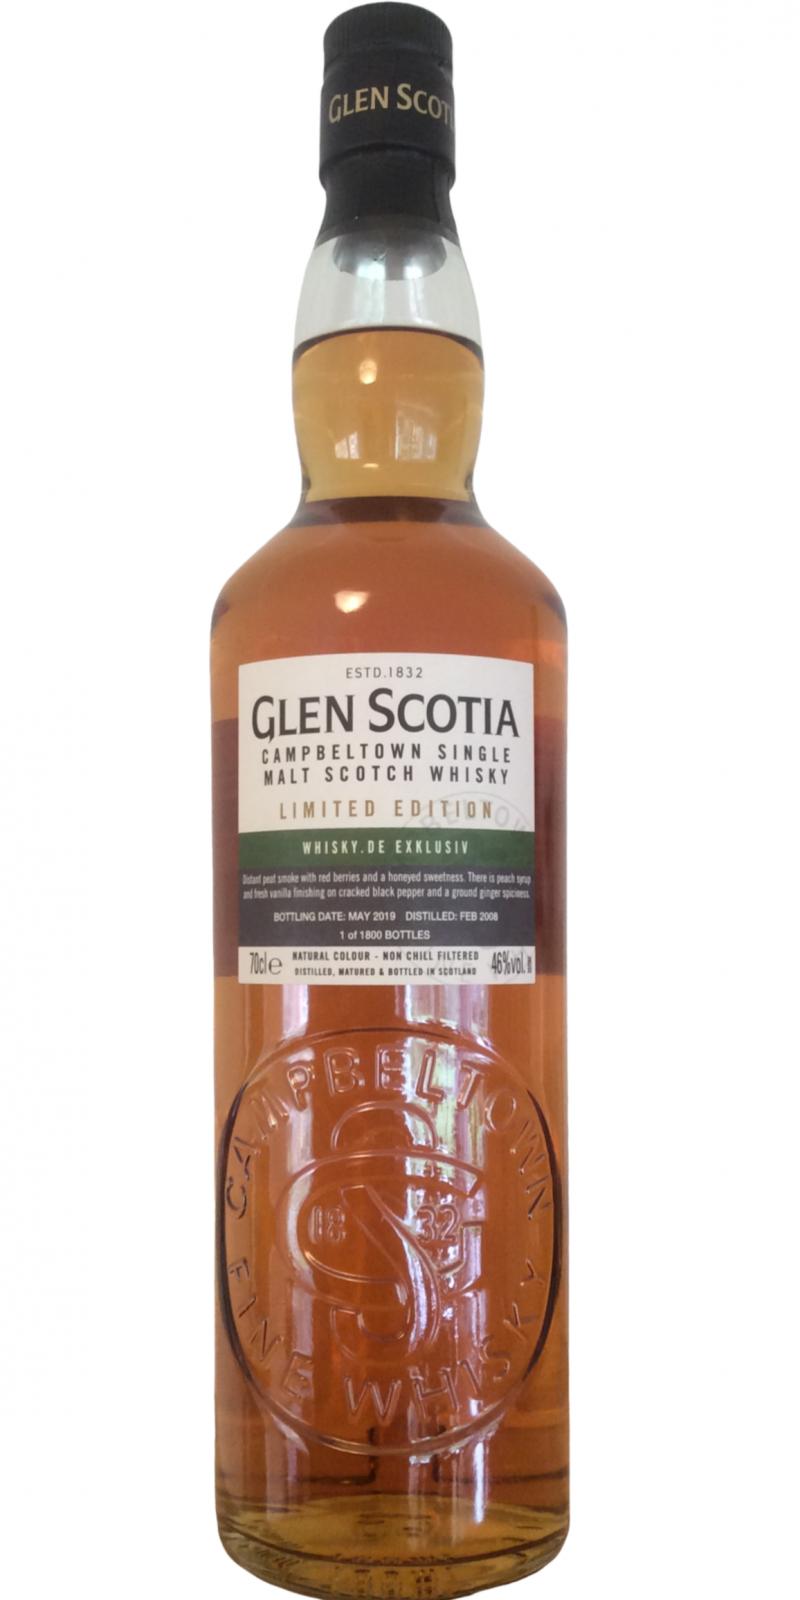 Glen Scotia 2008 Limited Edition Ruby Port Cask Finished whisky.de Exklusiv 46% 700ml